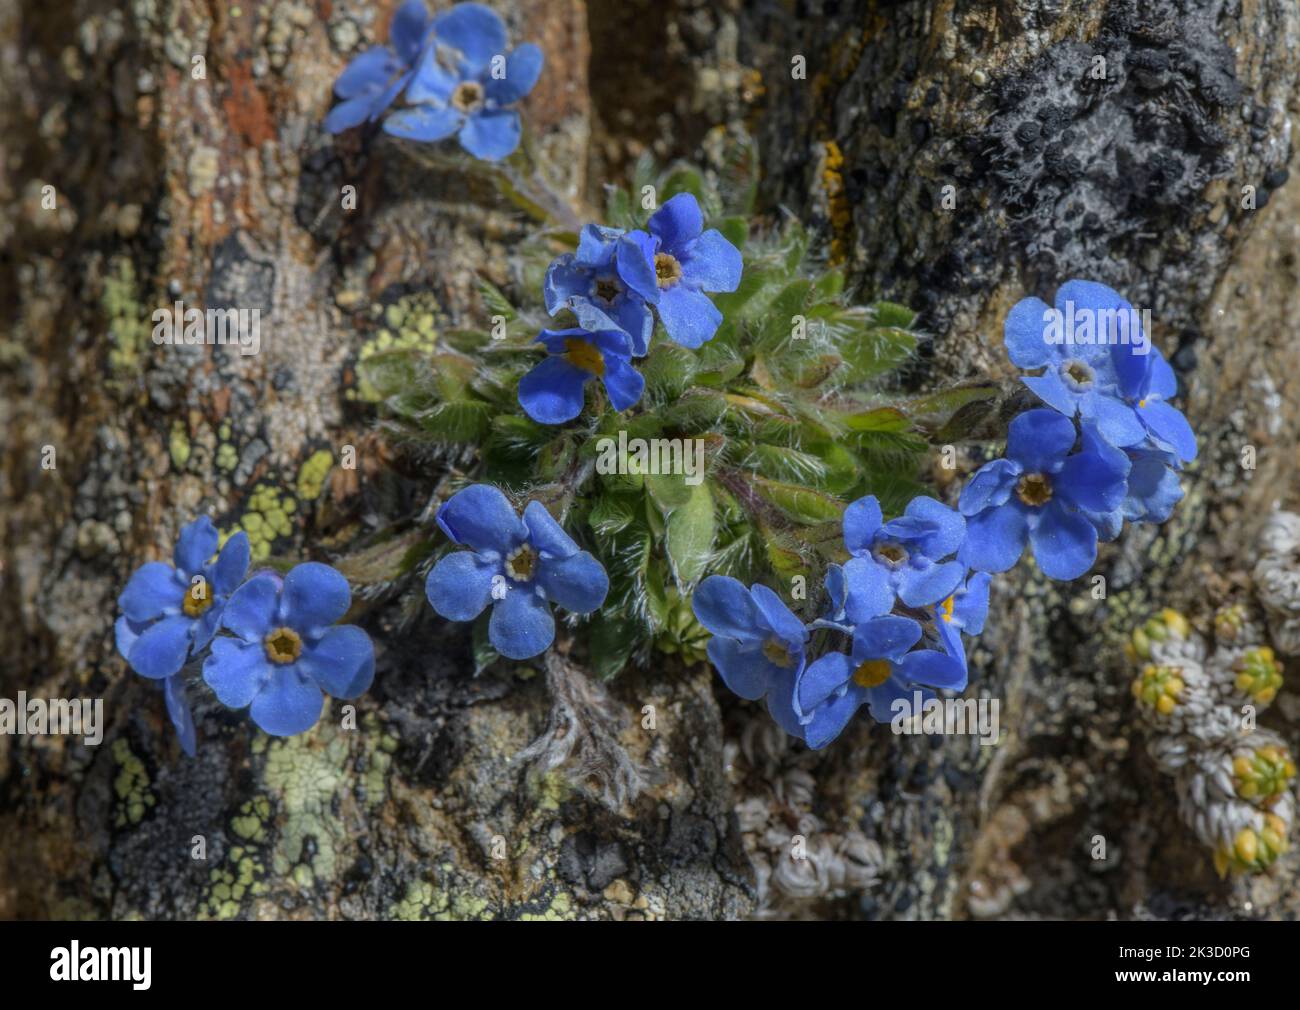 King of the Alps, Eritrichium nanum in flower on acid rocks at high altitude, Italian Alps. Stock Photo